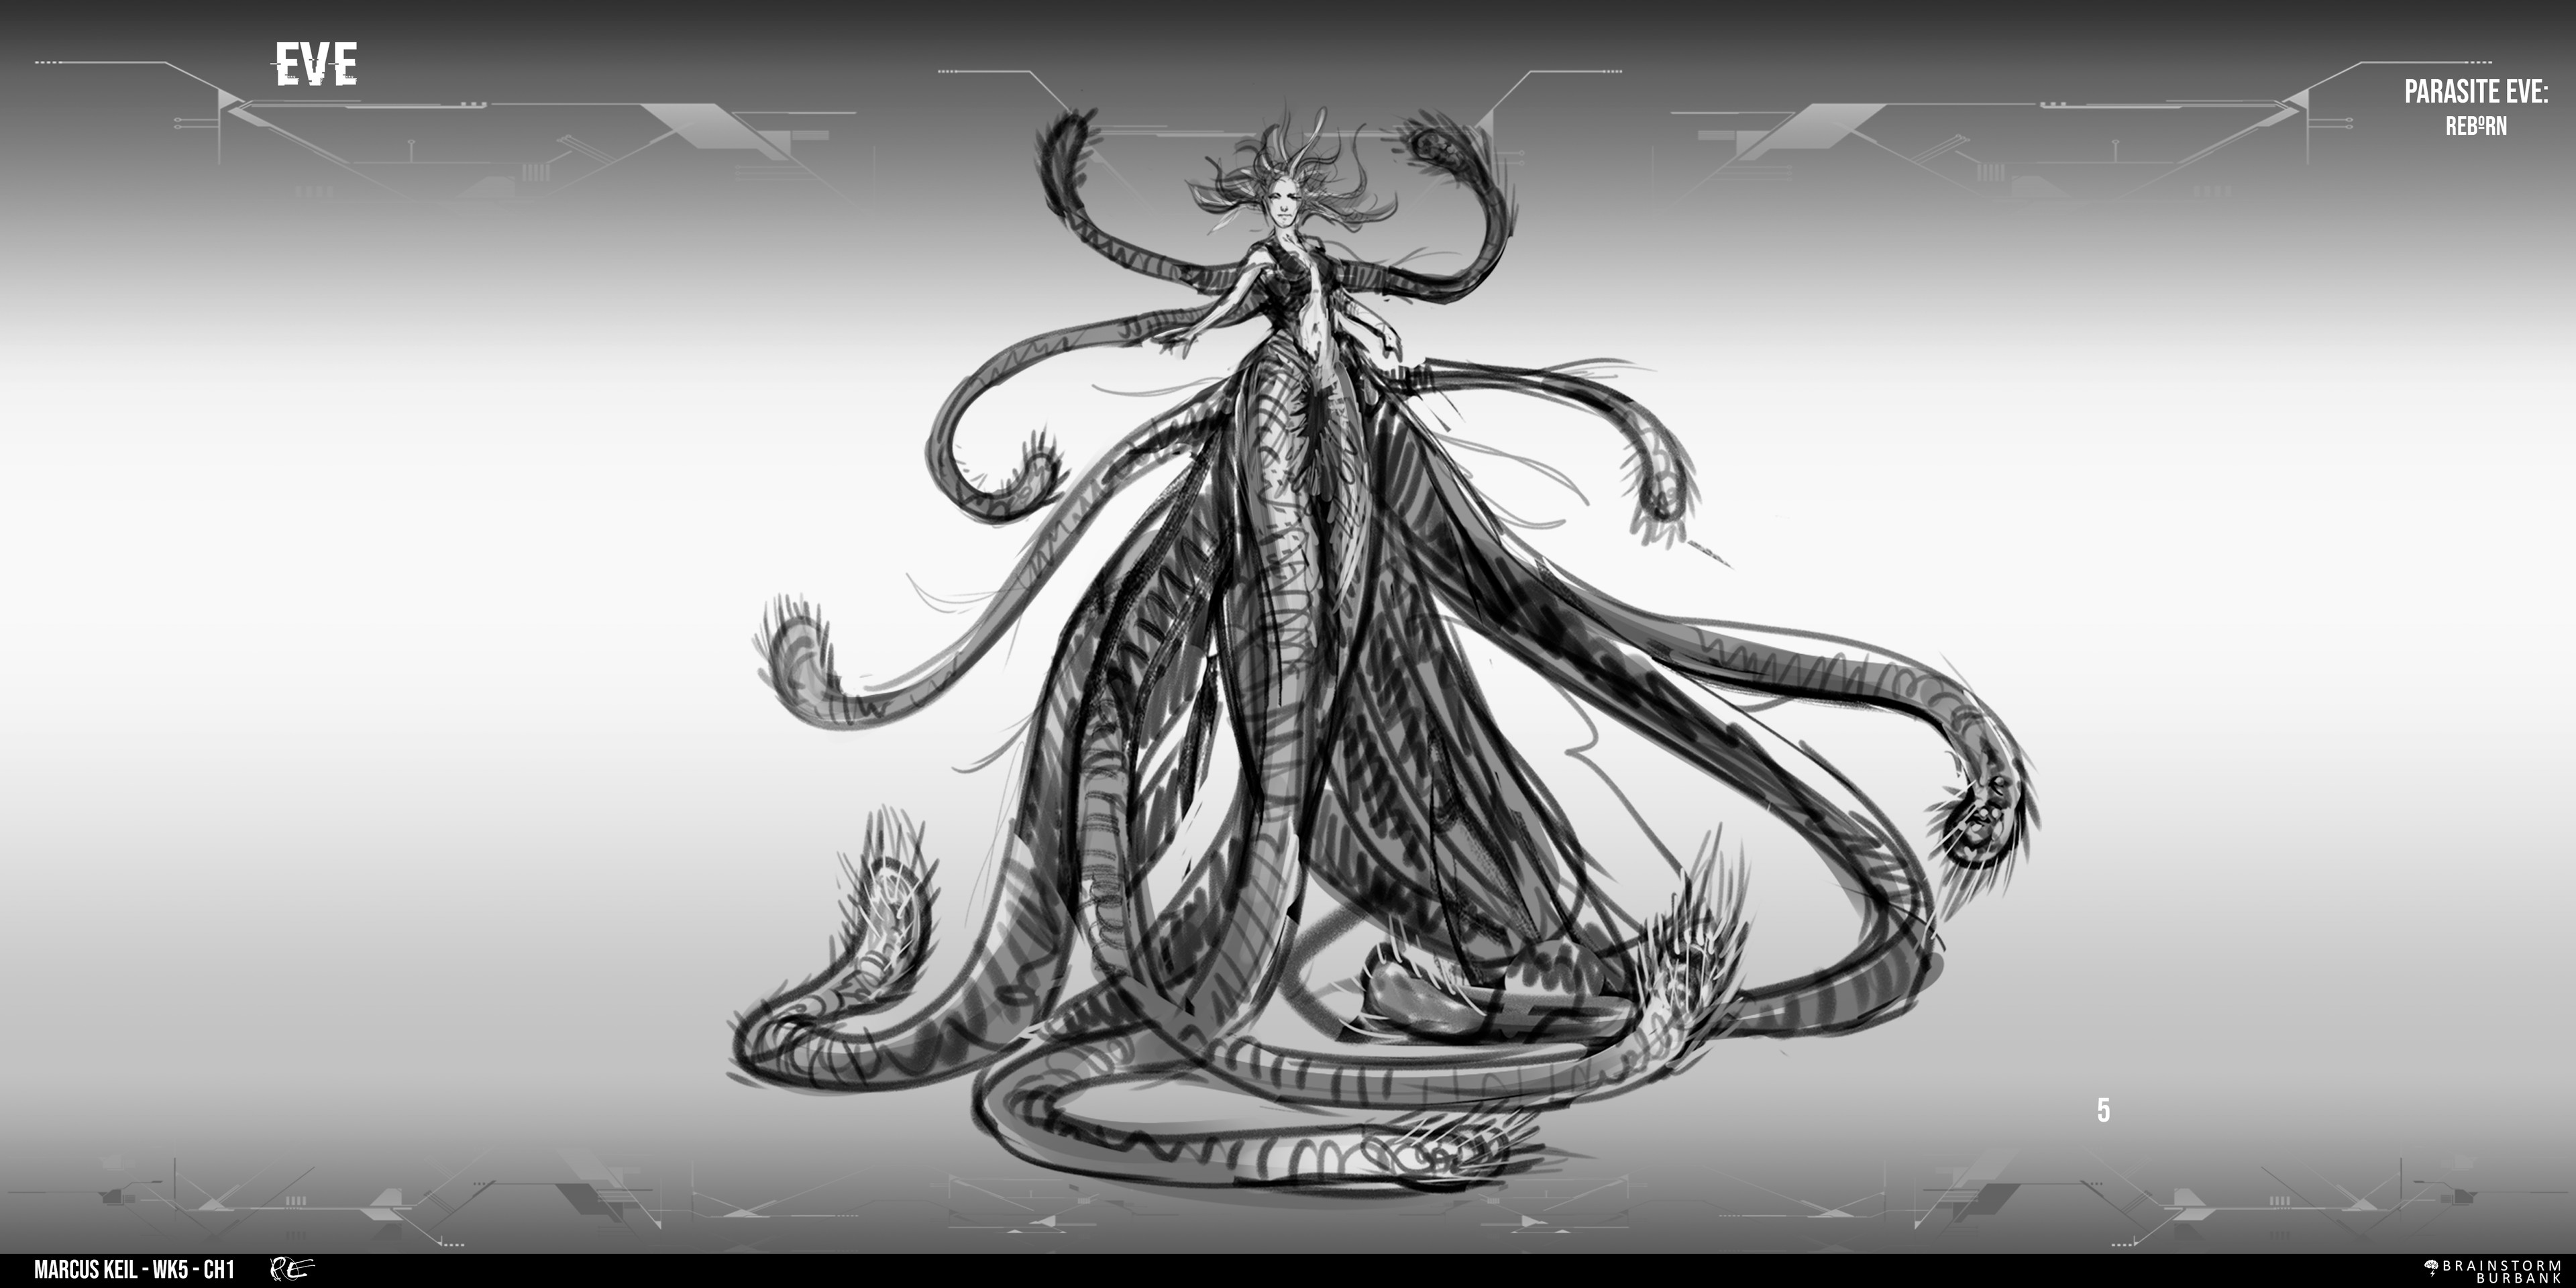 Monster Creation of Eve (From Parasite Eve) : r/PixelArt